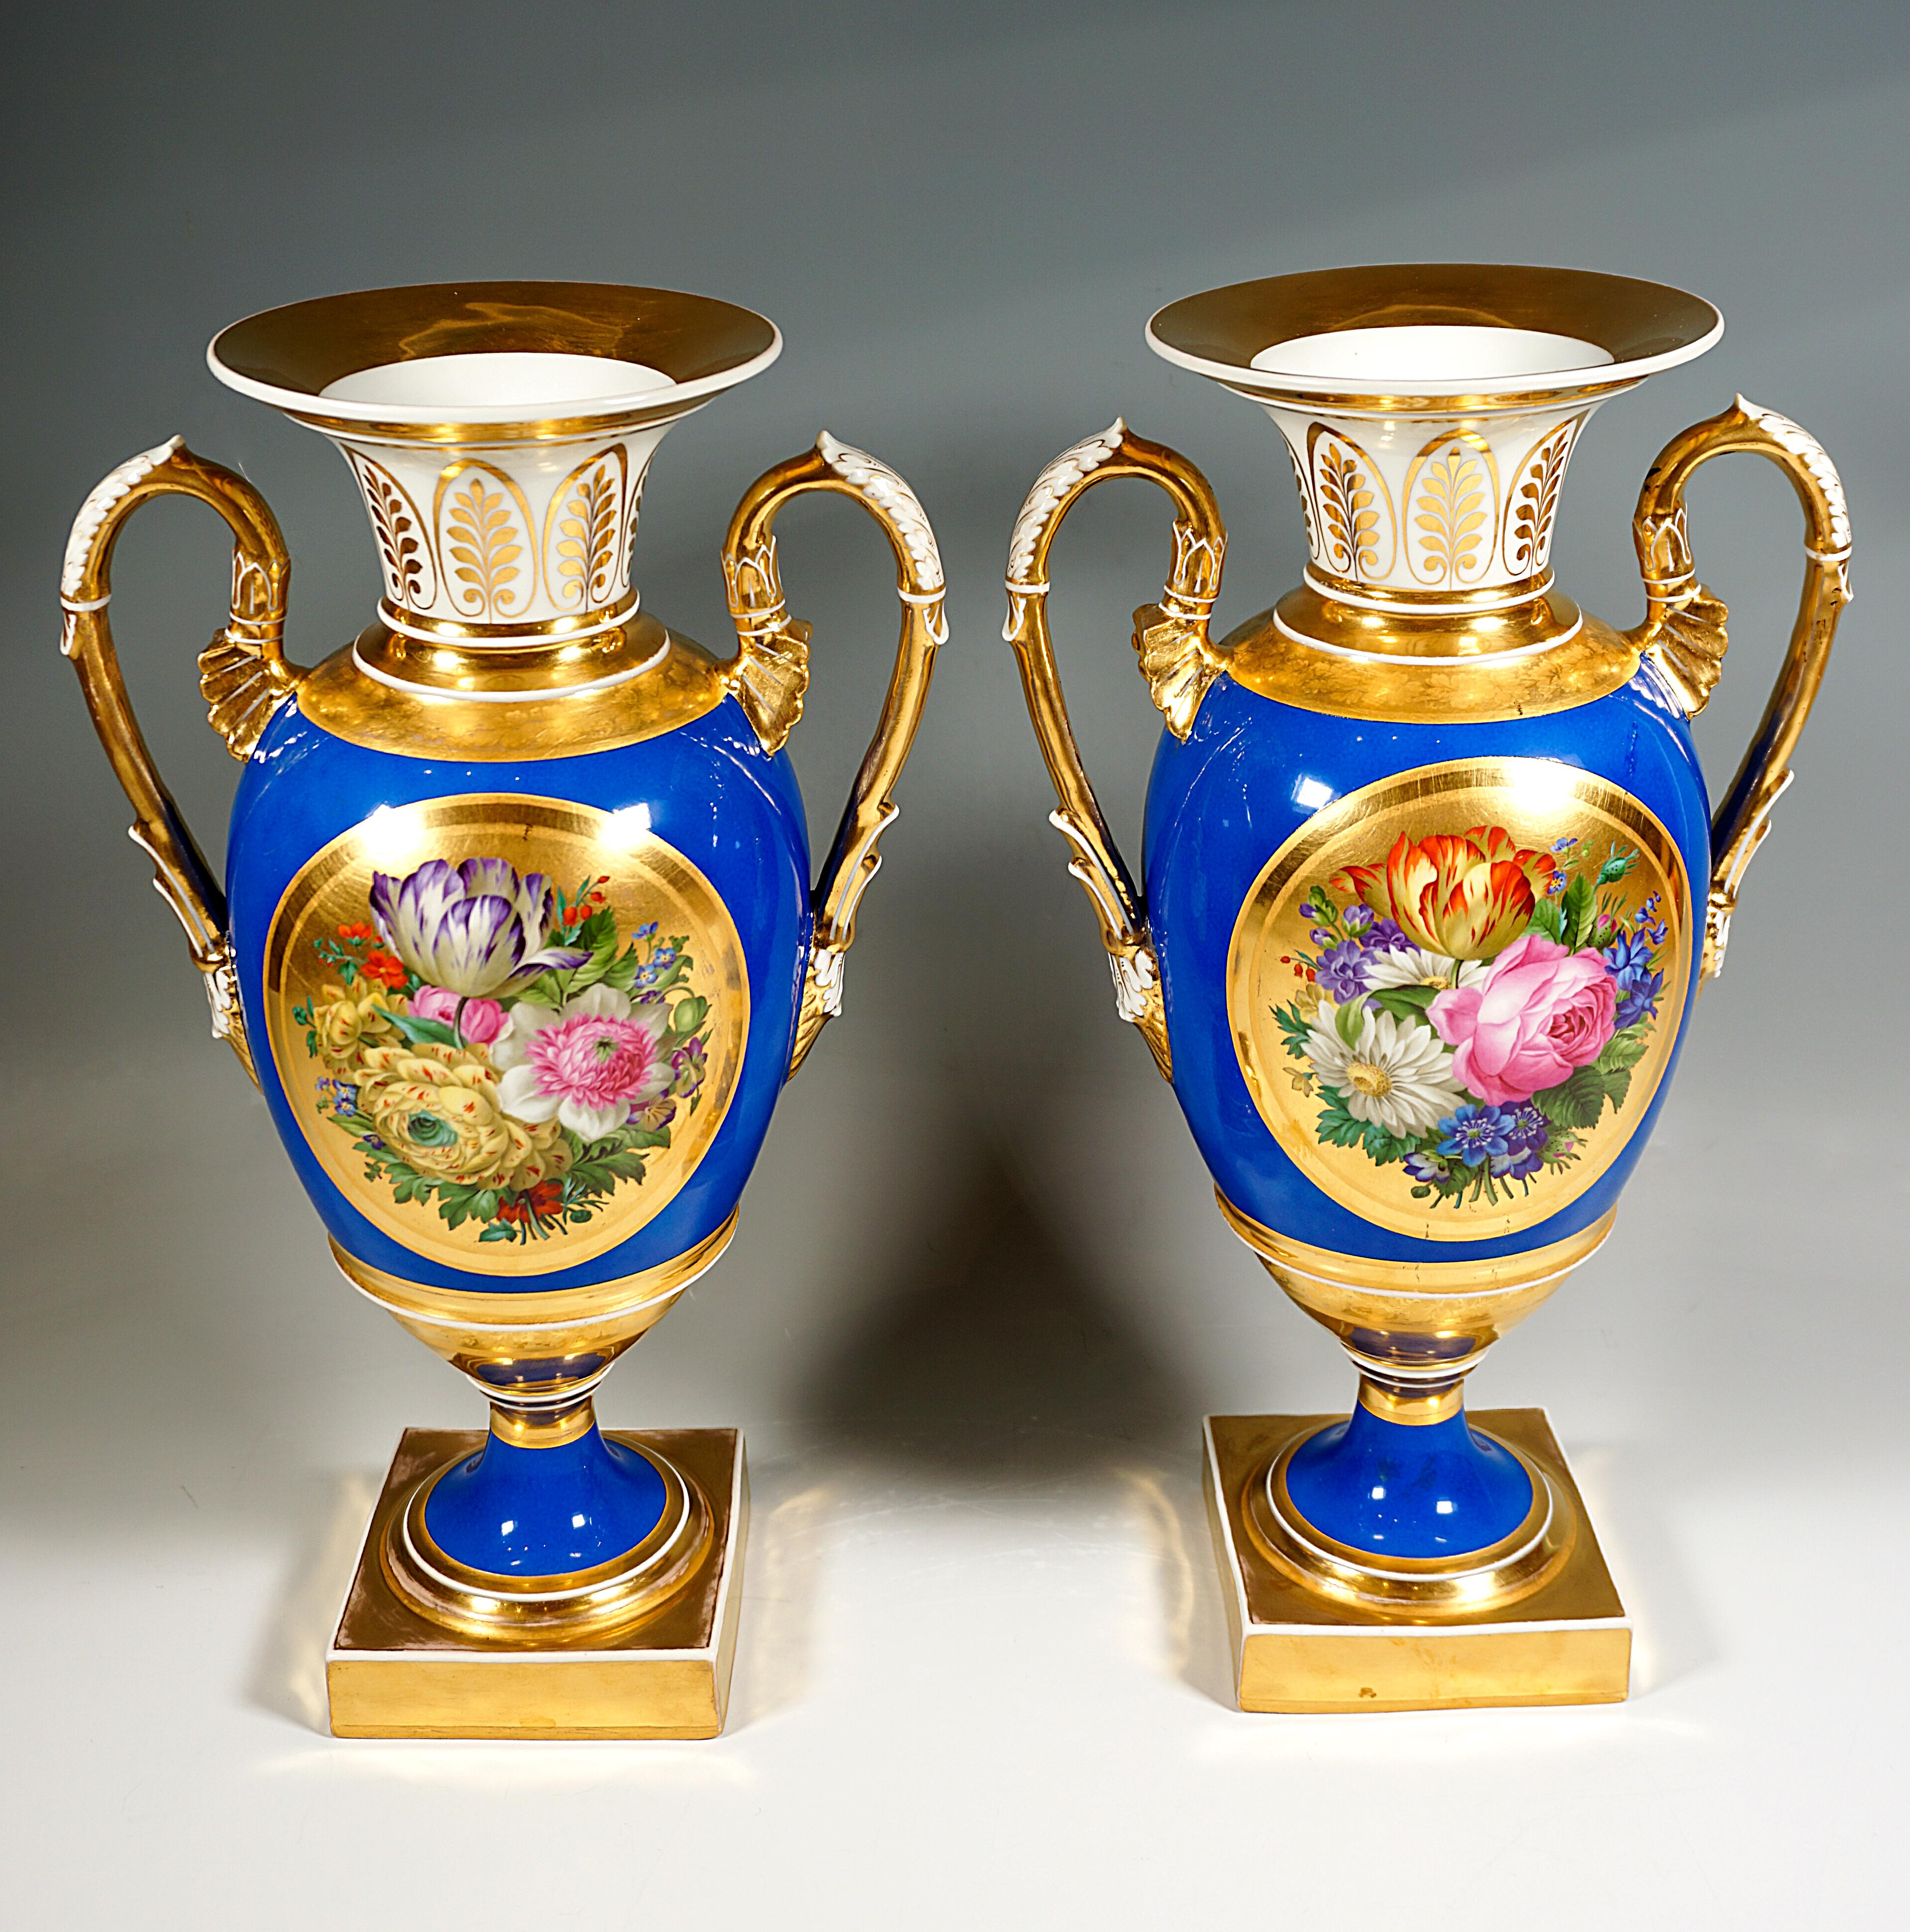 Porcelain Pair of Imperial Vienna Amphora Vases, Rich Bouquet Painting, Leopold Lieb 1828